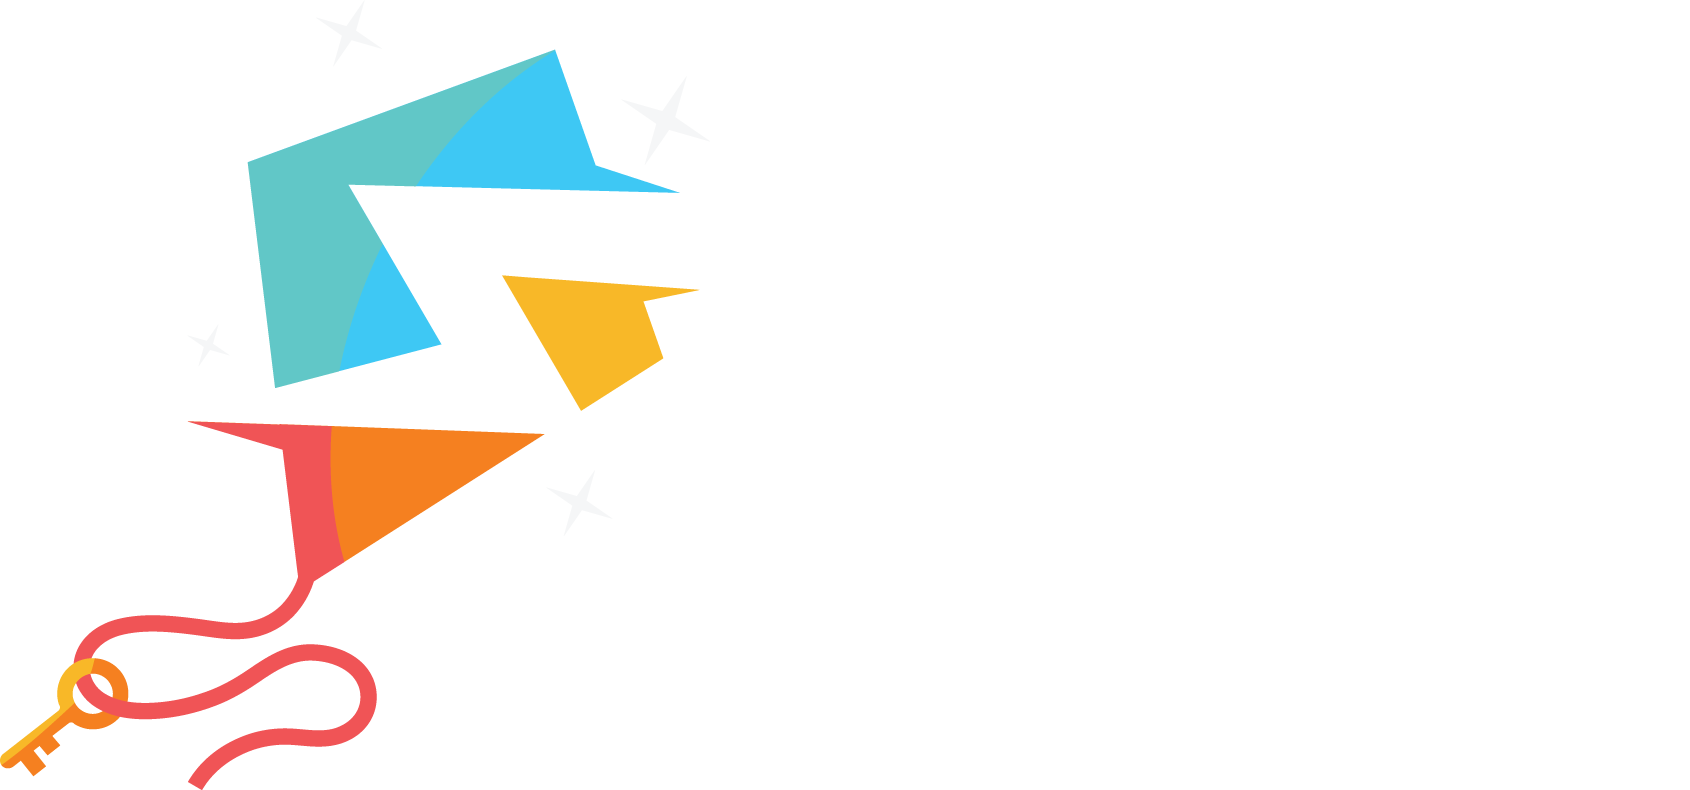 Philly Blockchain Tech